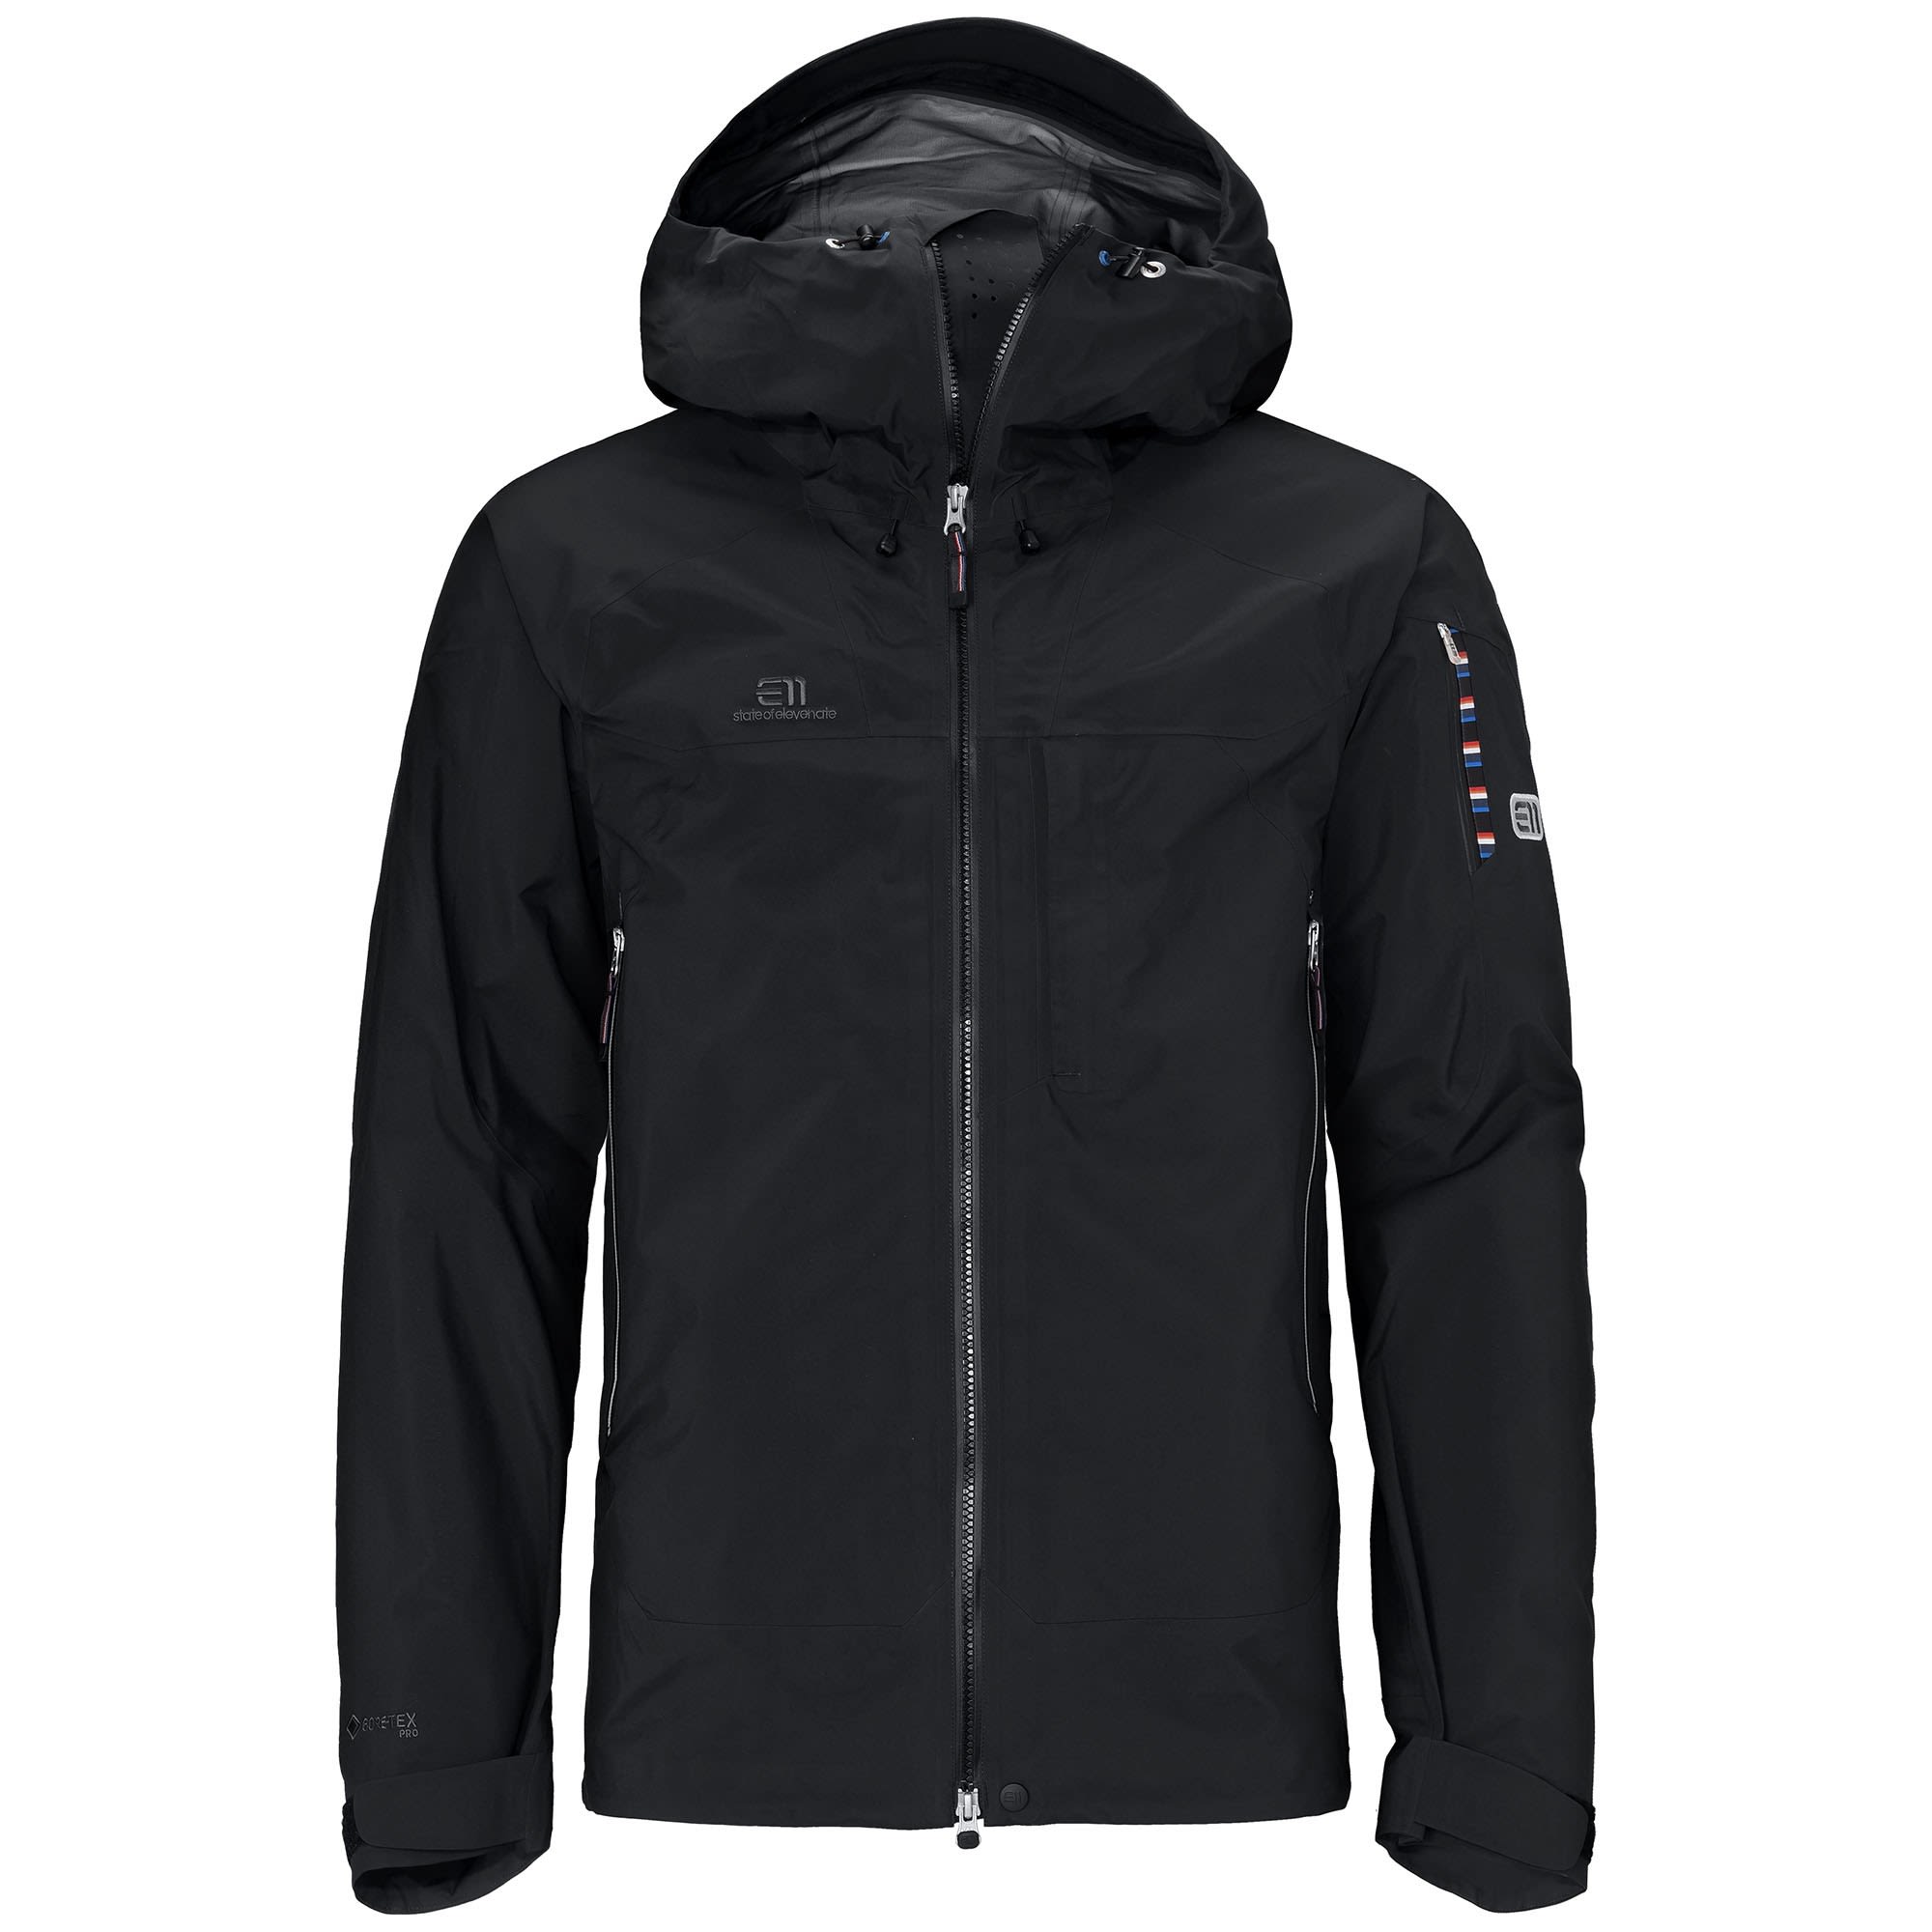 Elevenate BEC DE Rosses Jacket Schwarz- Male Gore-Tex(R) Anoraks- Grsse M - Farbe Black unter Elevenate